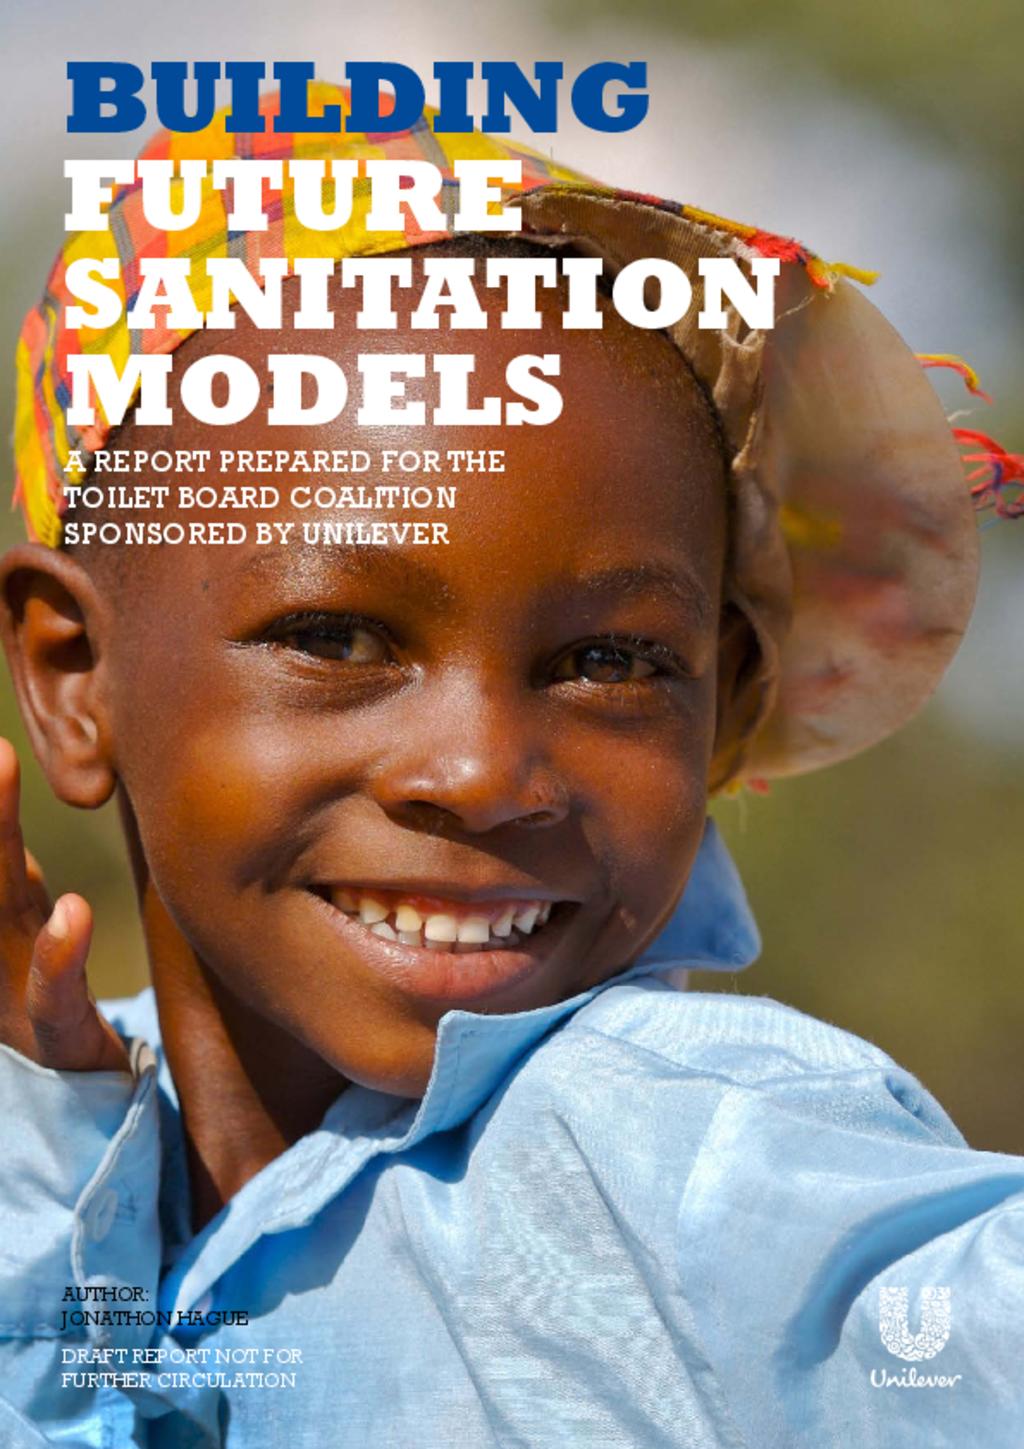 Future models_Sanitation